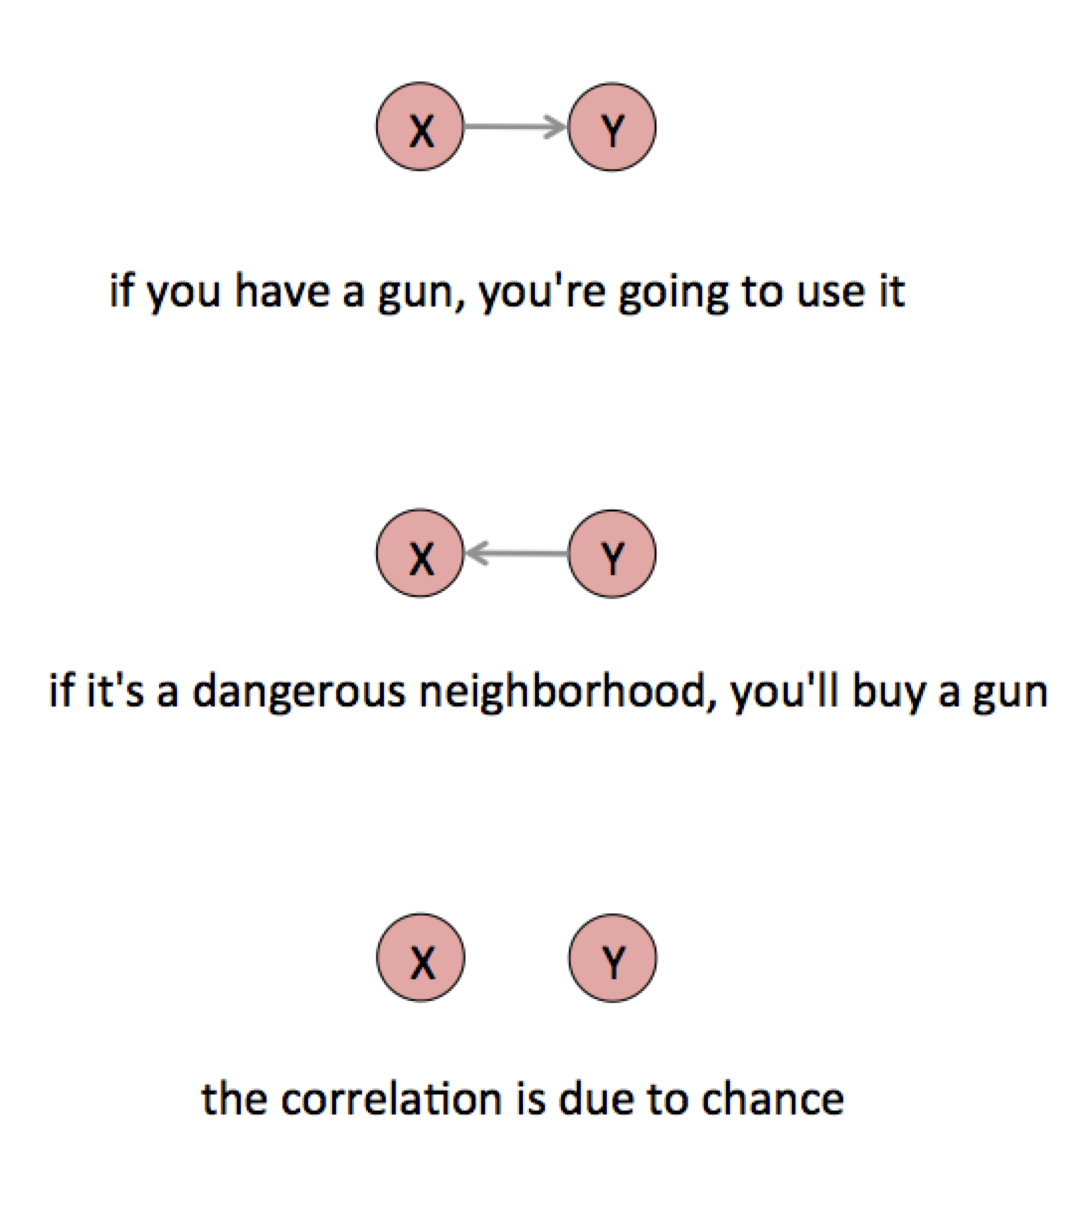 Gun correlation/causation example.